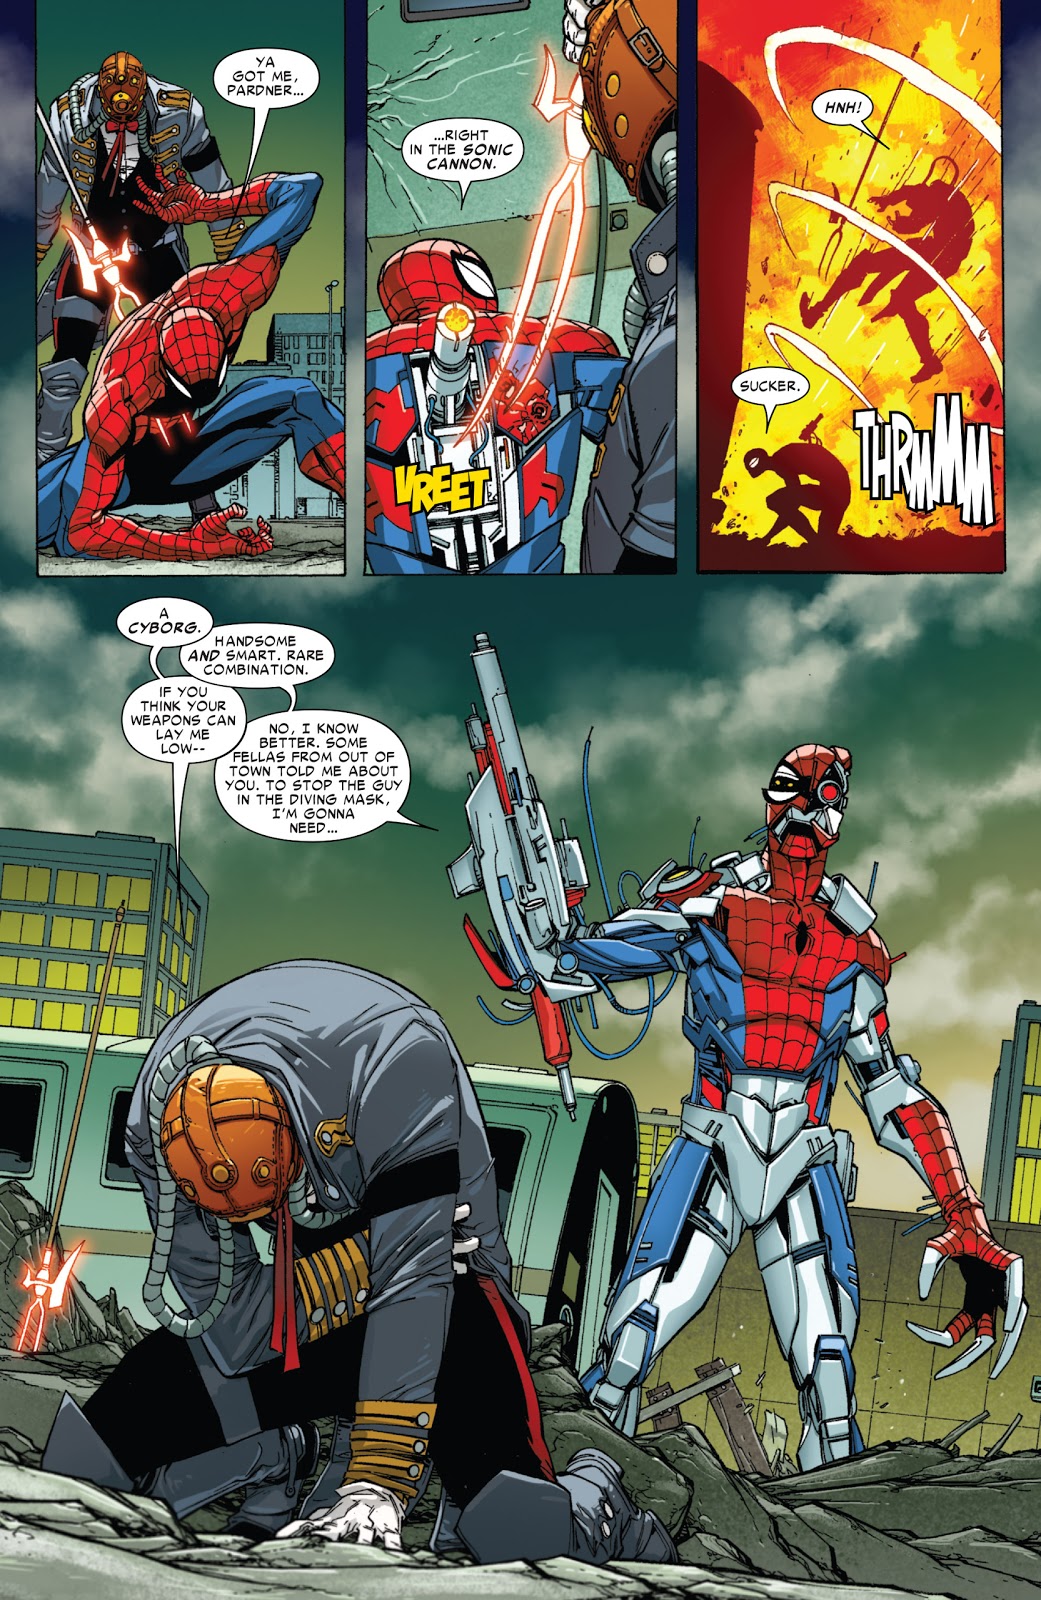 Spider-Cyborg VS Karn Of The Inheritors 